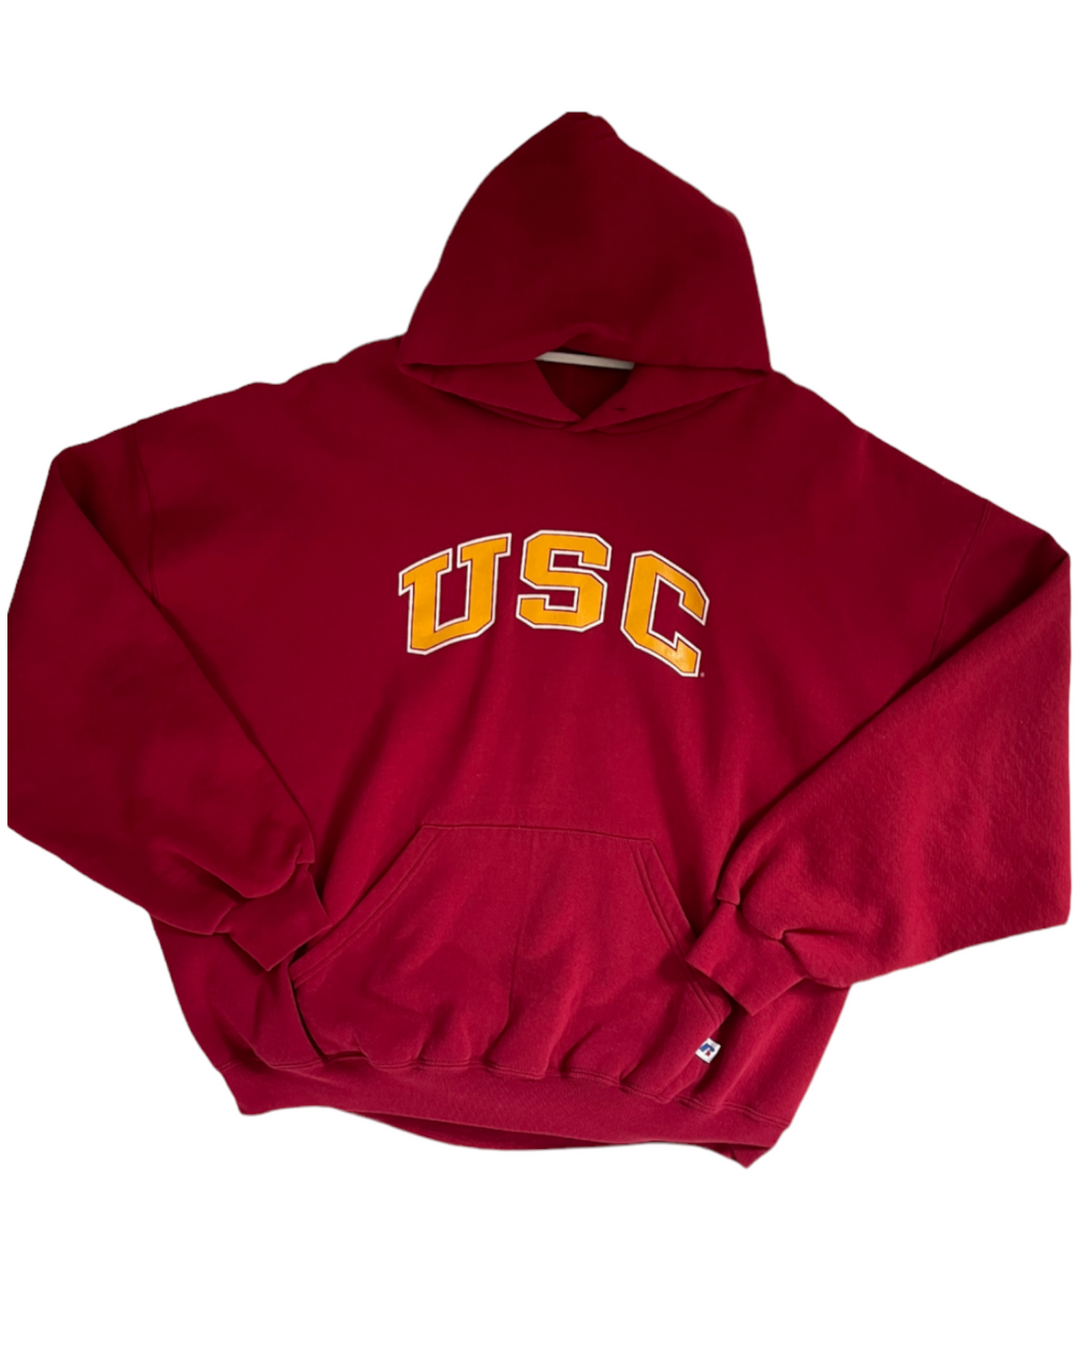 USC Vintage Sweatshirt